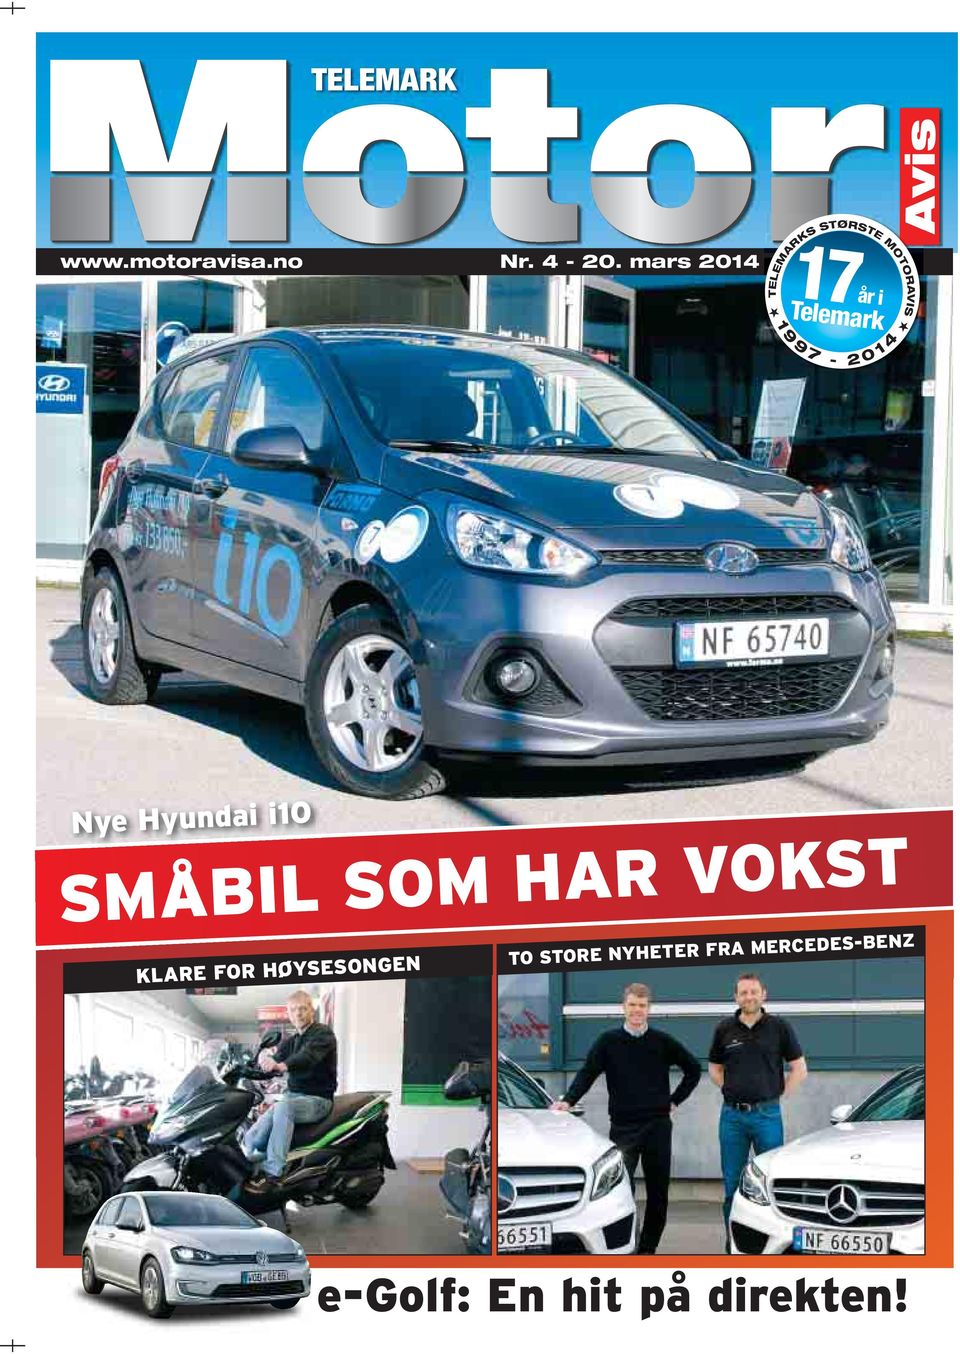 9 7-2 0 1 4 Nye Hyundai i10 SMÅBIL SOM HAR VOKST KLARE FOR